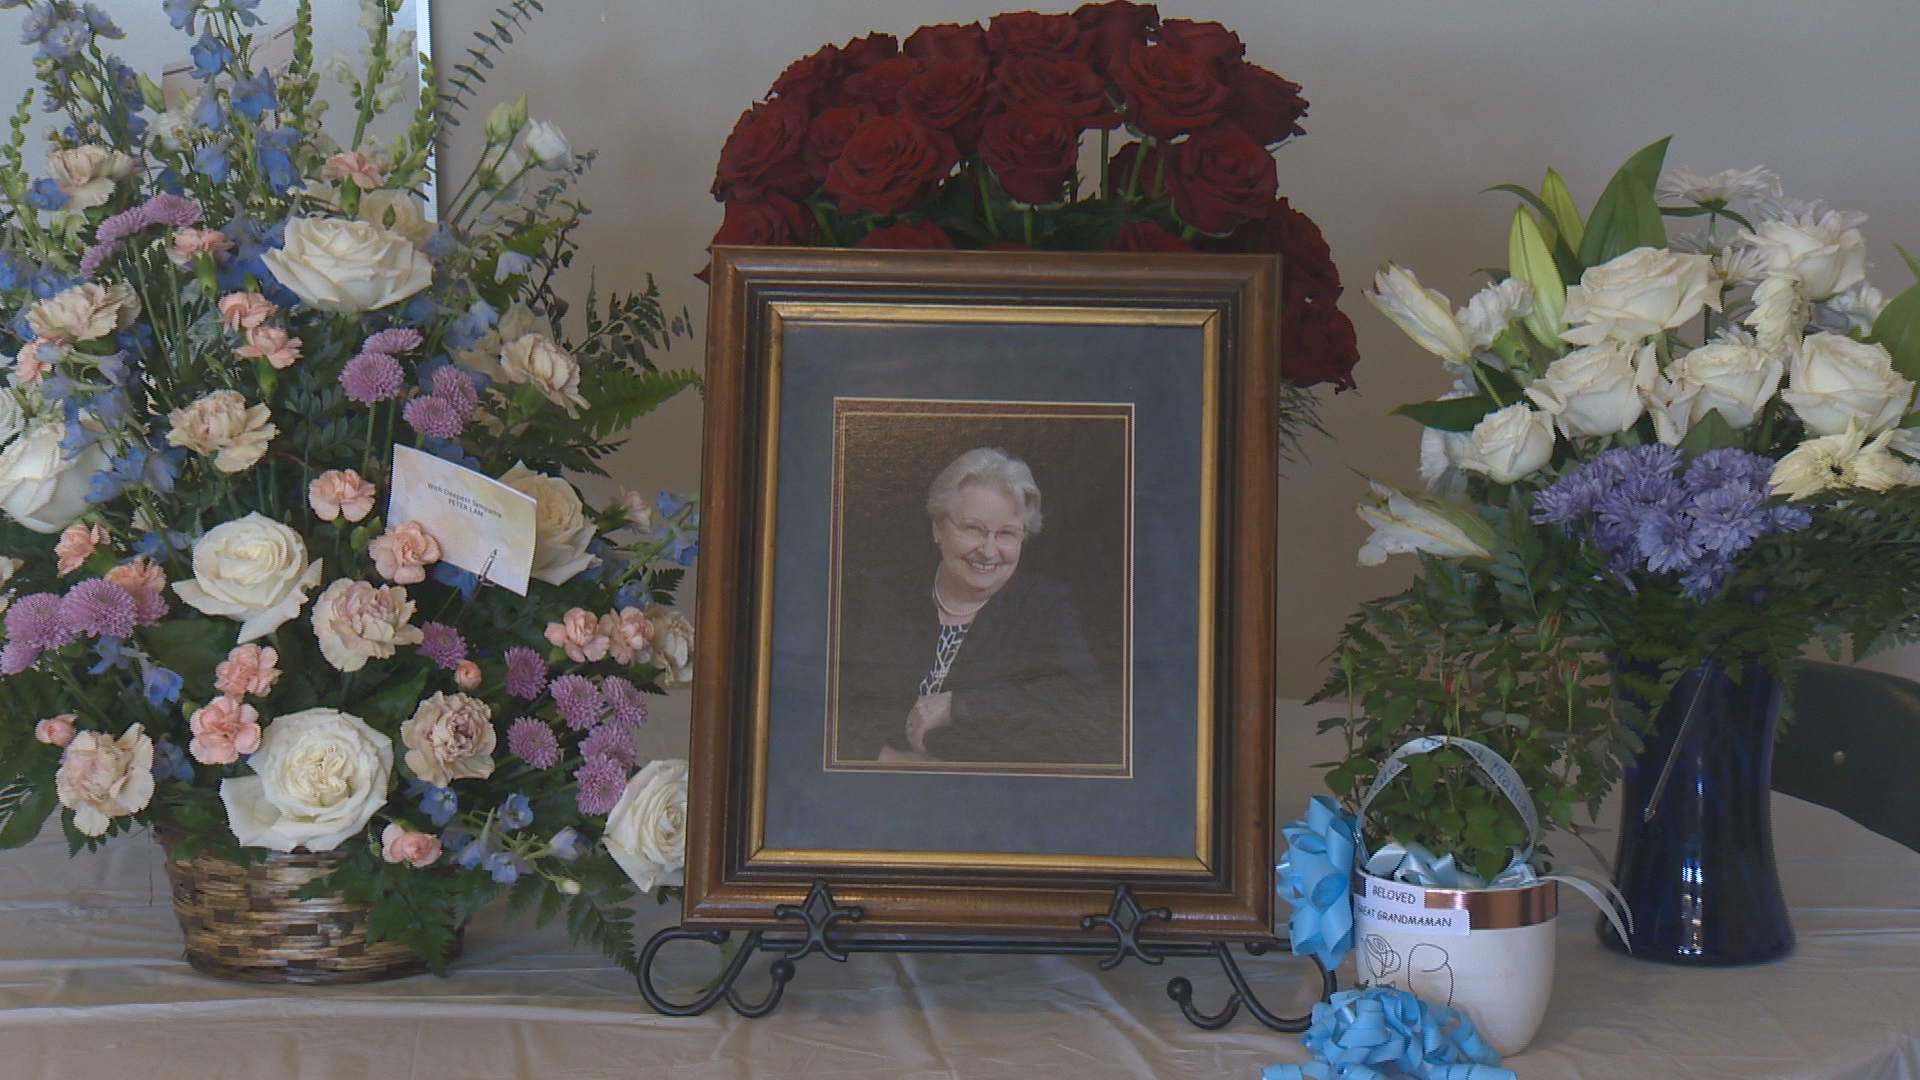 Winnipeg community honors legacy of Evelyne Reese, former city councillor - Winnipeg